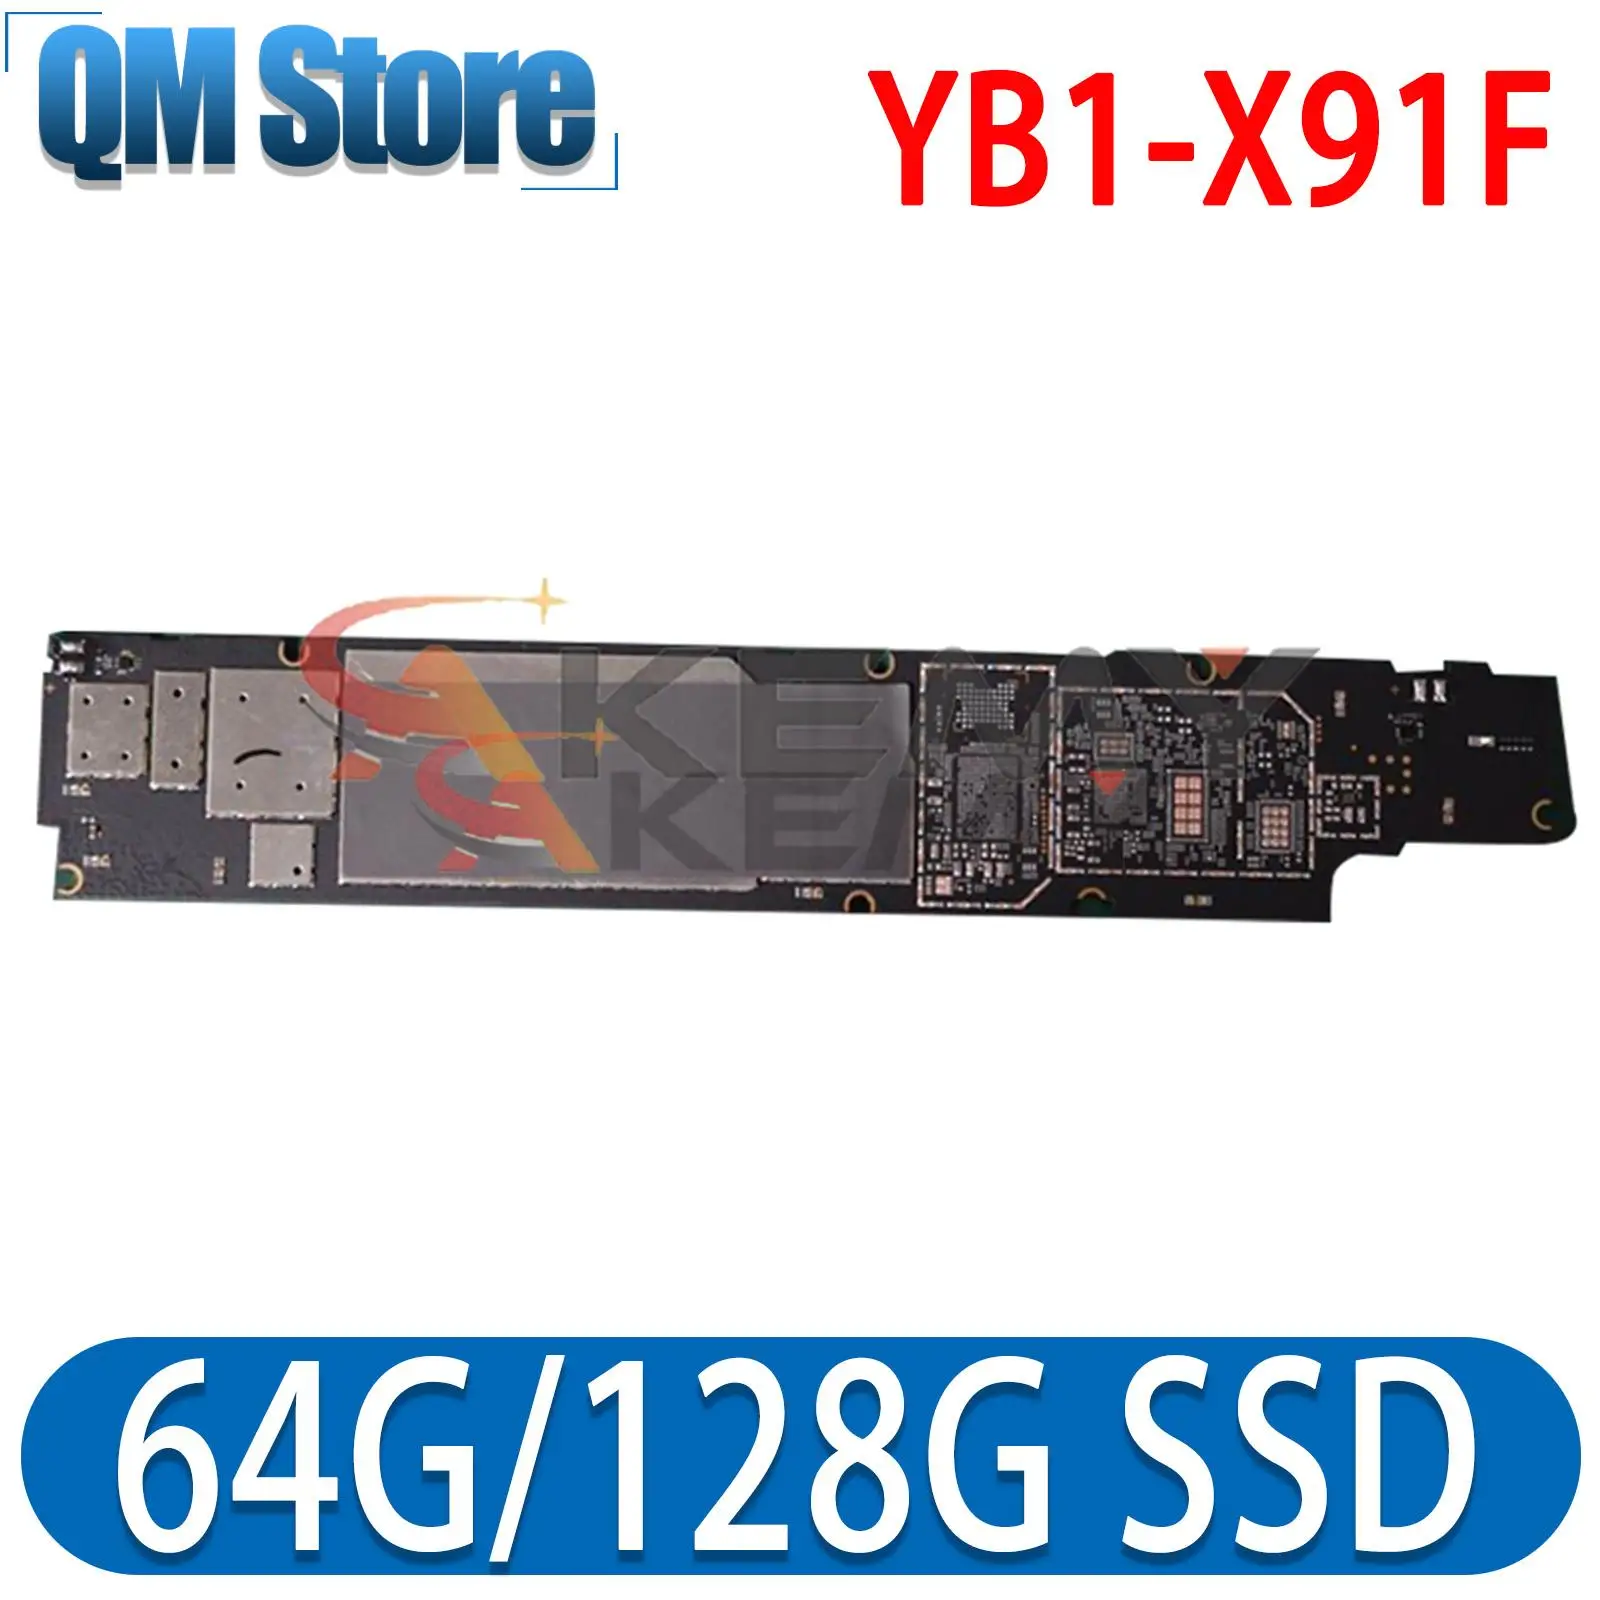 

Electronic Panel Mainboard Motherboard Circuits With Firmwar For Lenovo YOGA BOOK1 X91 X91L X91F YB1-X91L YB1-X91F Win10